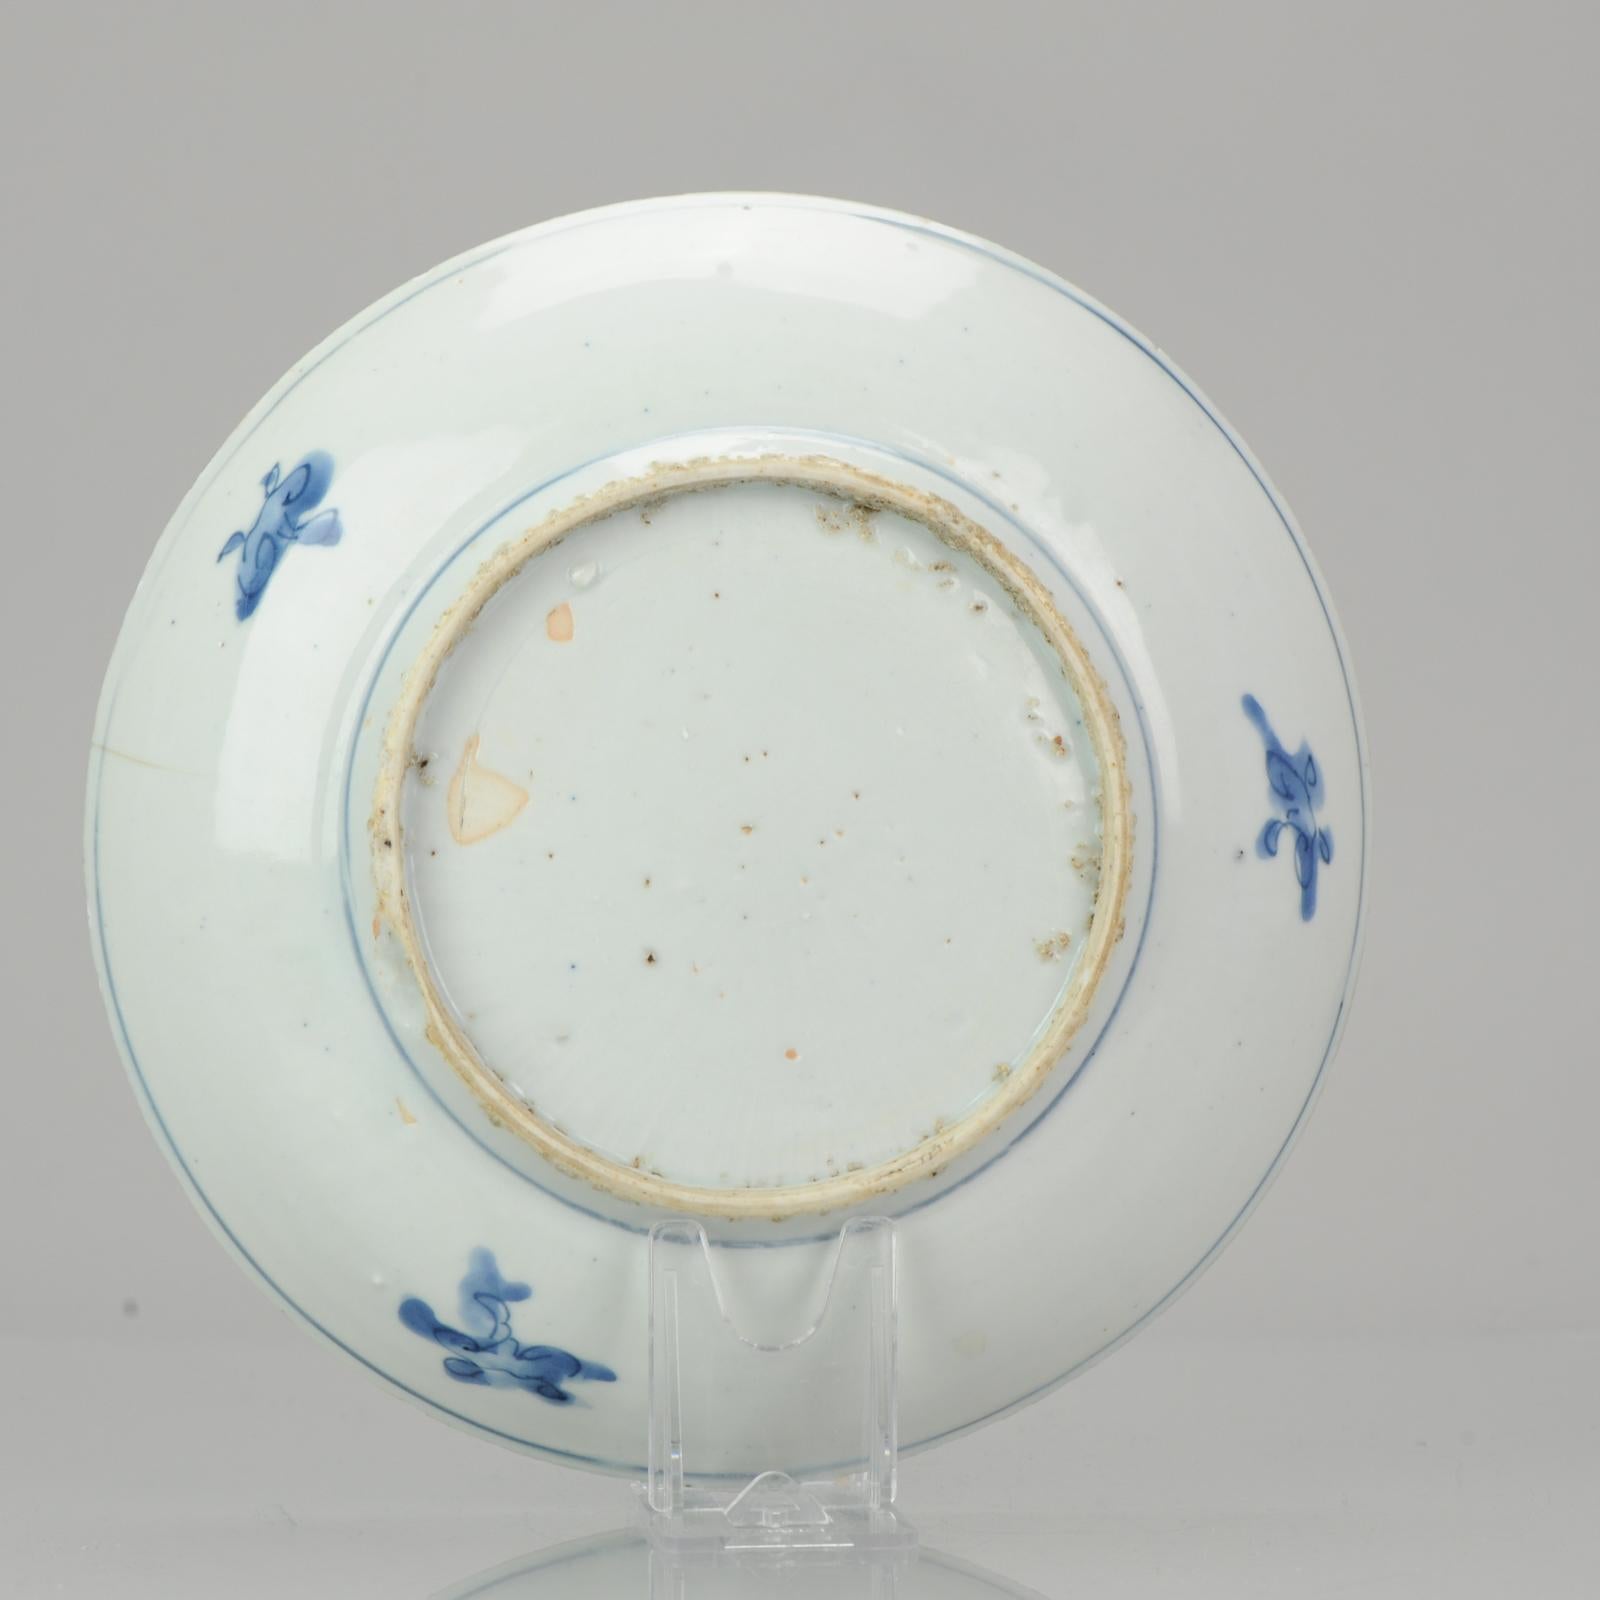 Antique Chinese Porcelain Lotus Ming 1600-1640 Tianqi Chongzhen Anhua Engraving For Sale 4